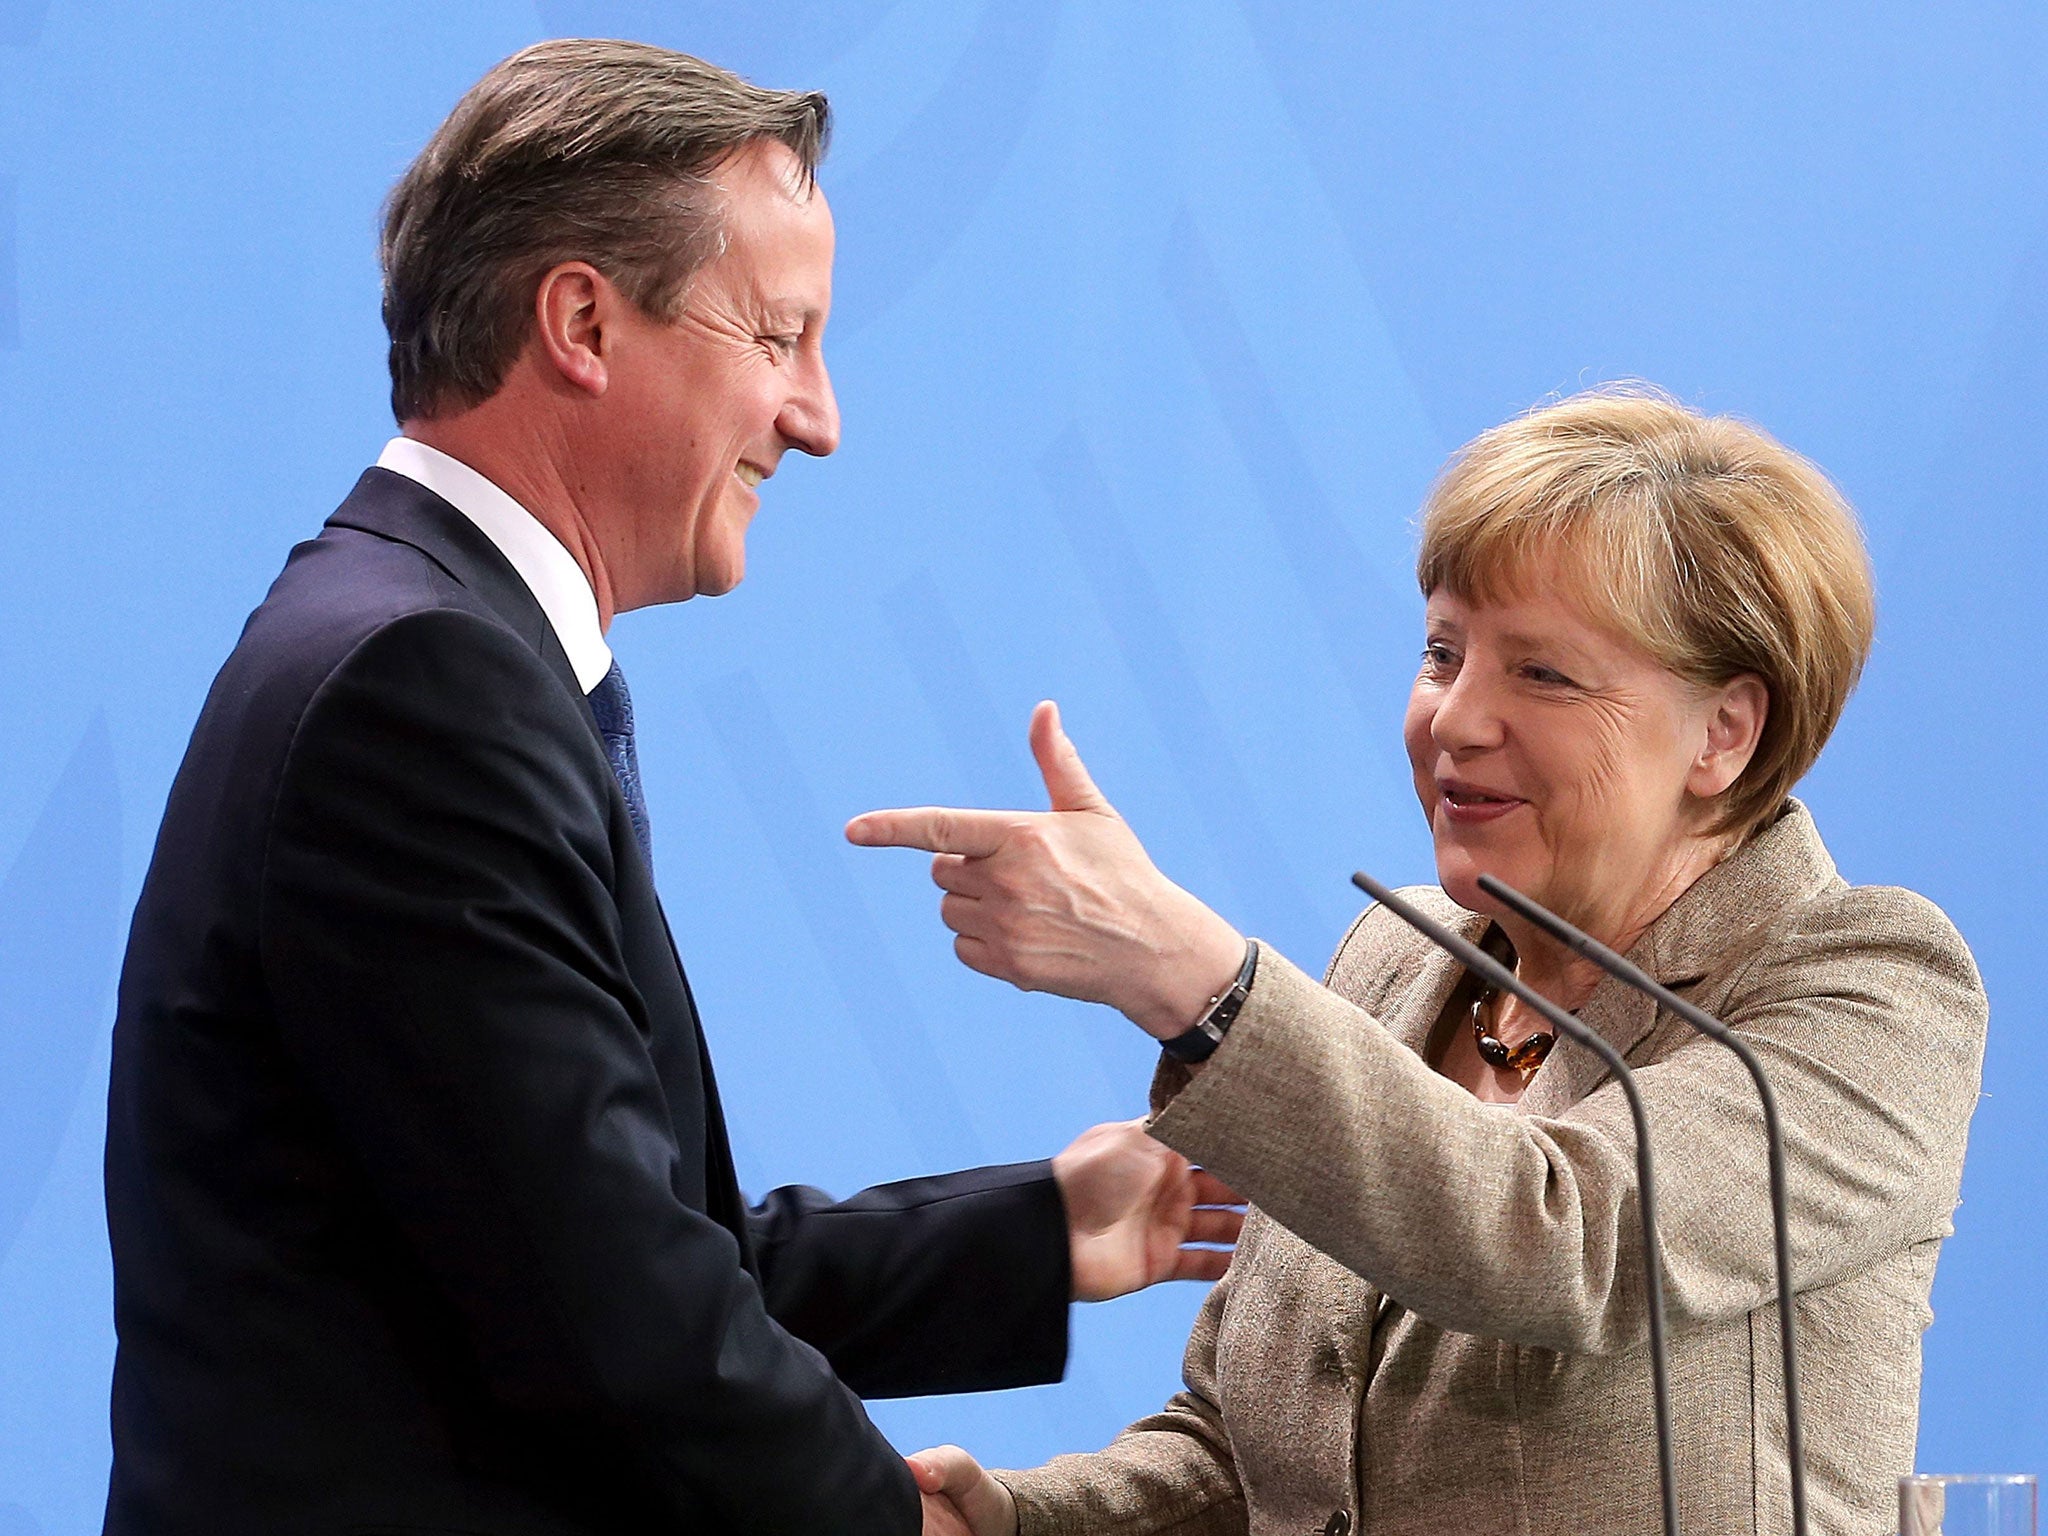 Angela Merkel and David Cameron say goodbye in the Bundeskanzleramt after their meeting in Berlin, Germany, 29 May 2015